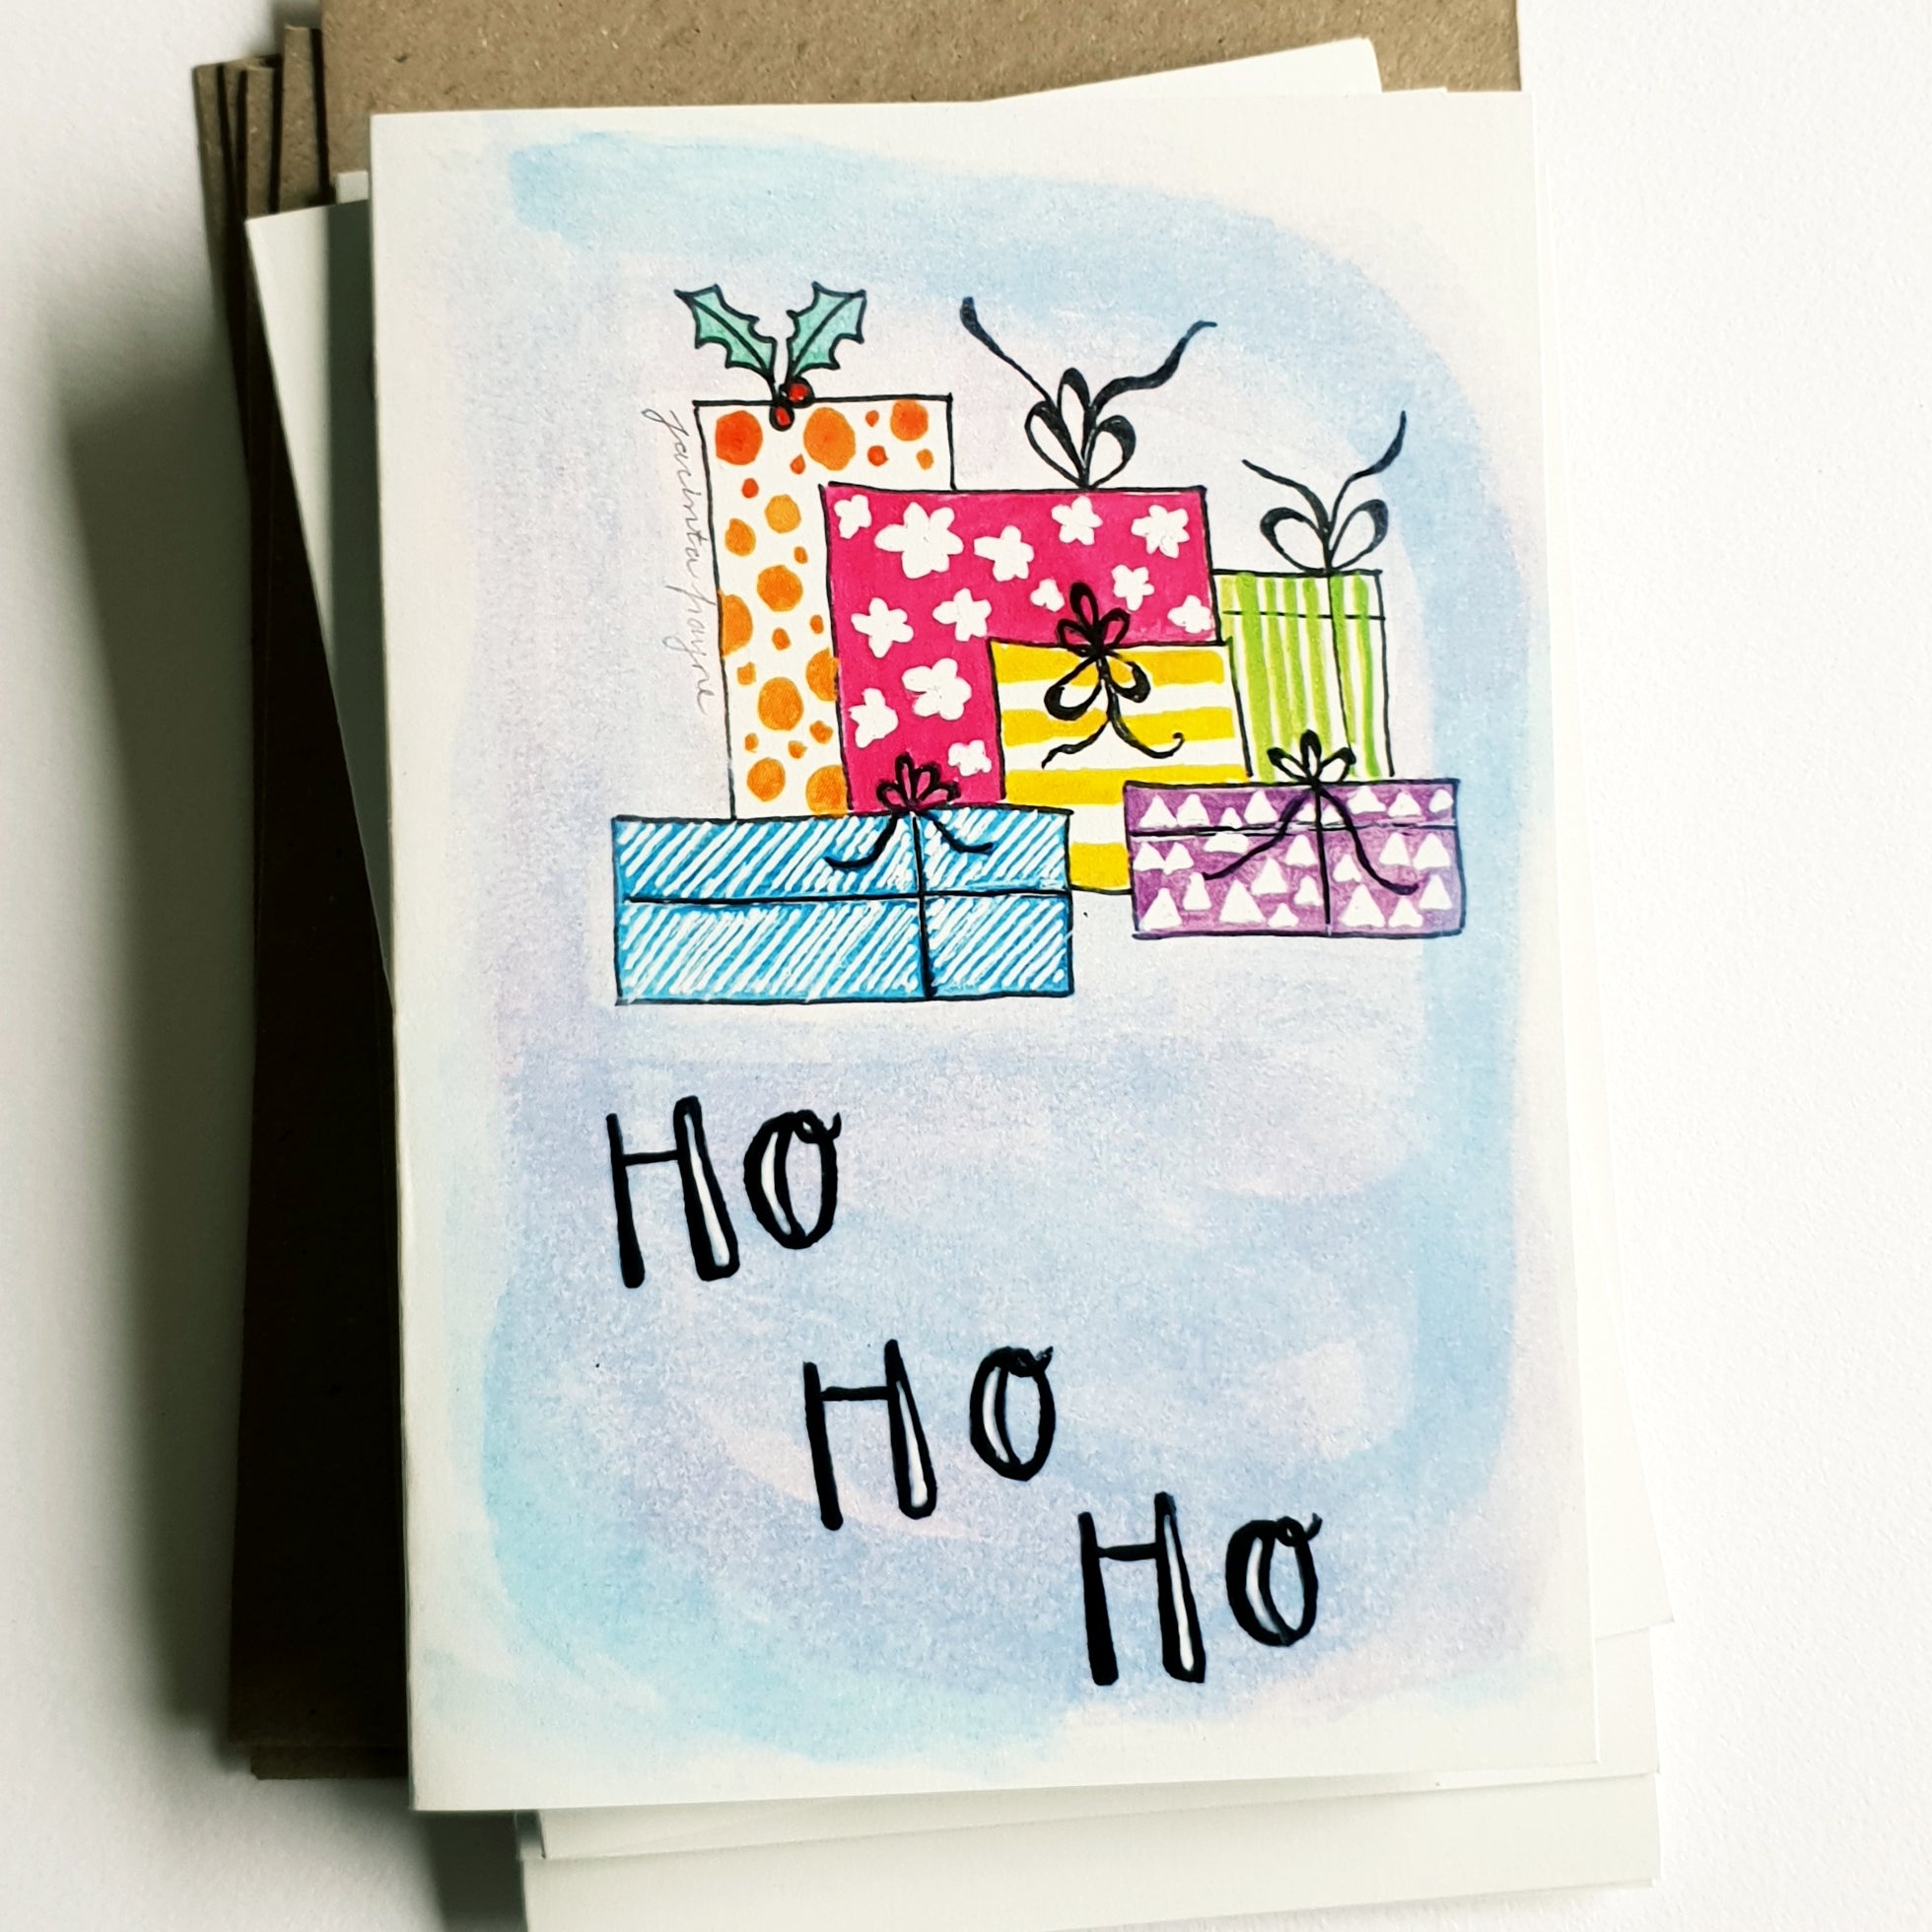 Christmas cards pack - Set of 5 "Ho Ho Ho" cards in A6 size including envelopes